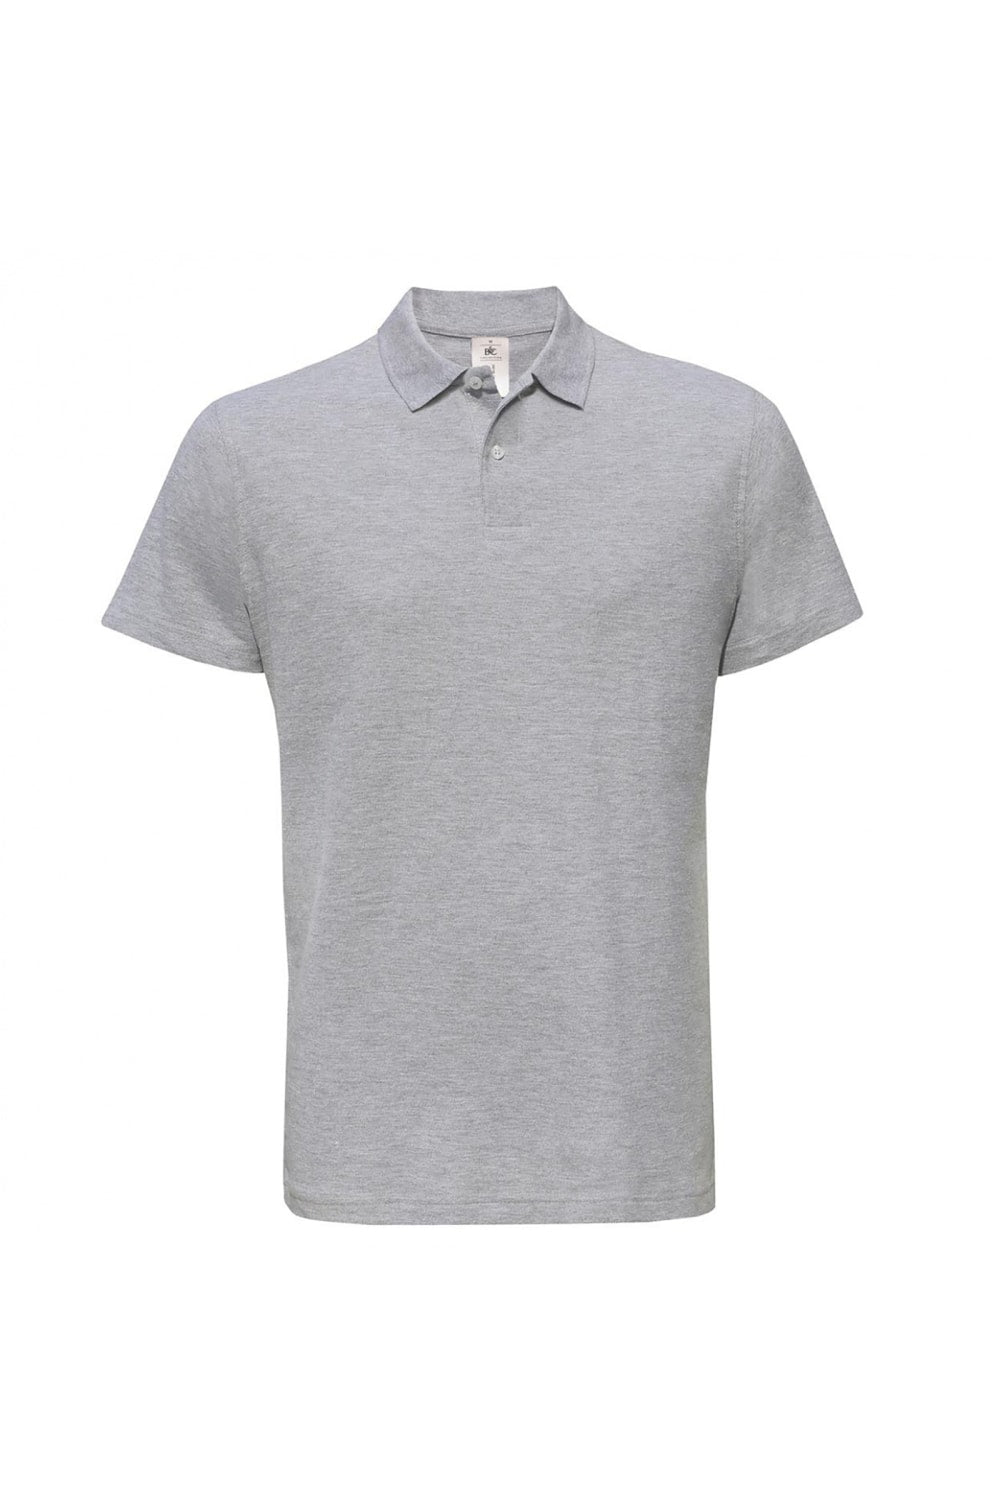 B&C ID.001 Mens Short Sleeve Polo Shirt (Heather Gray)